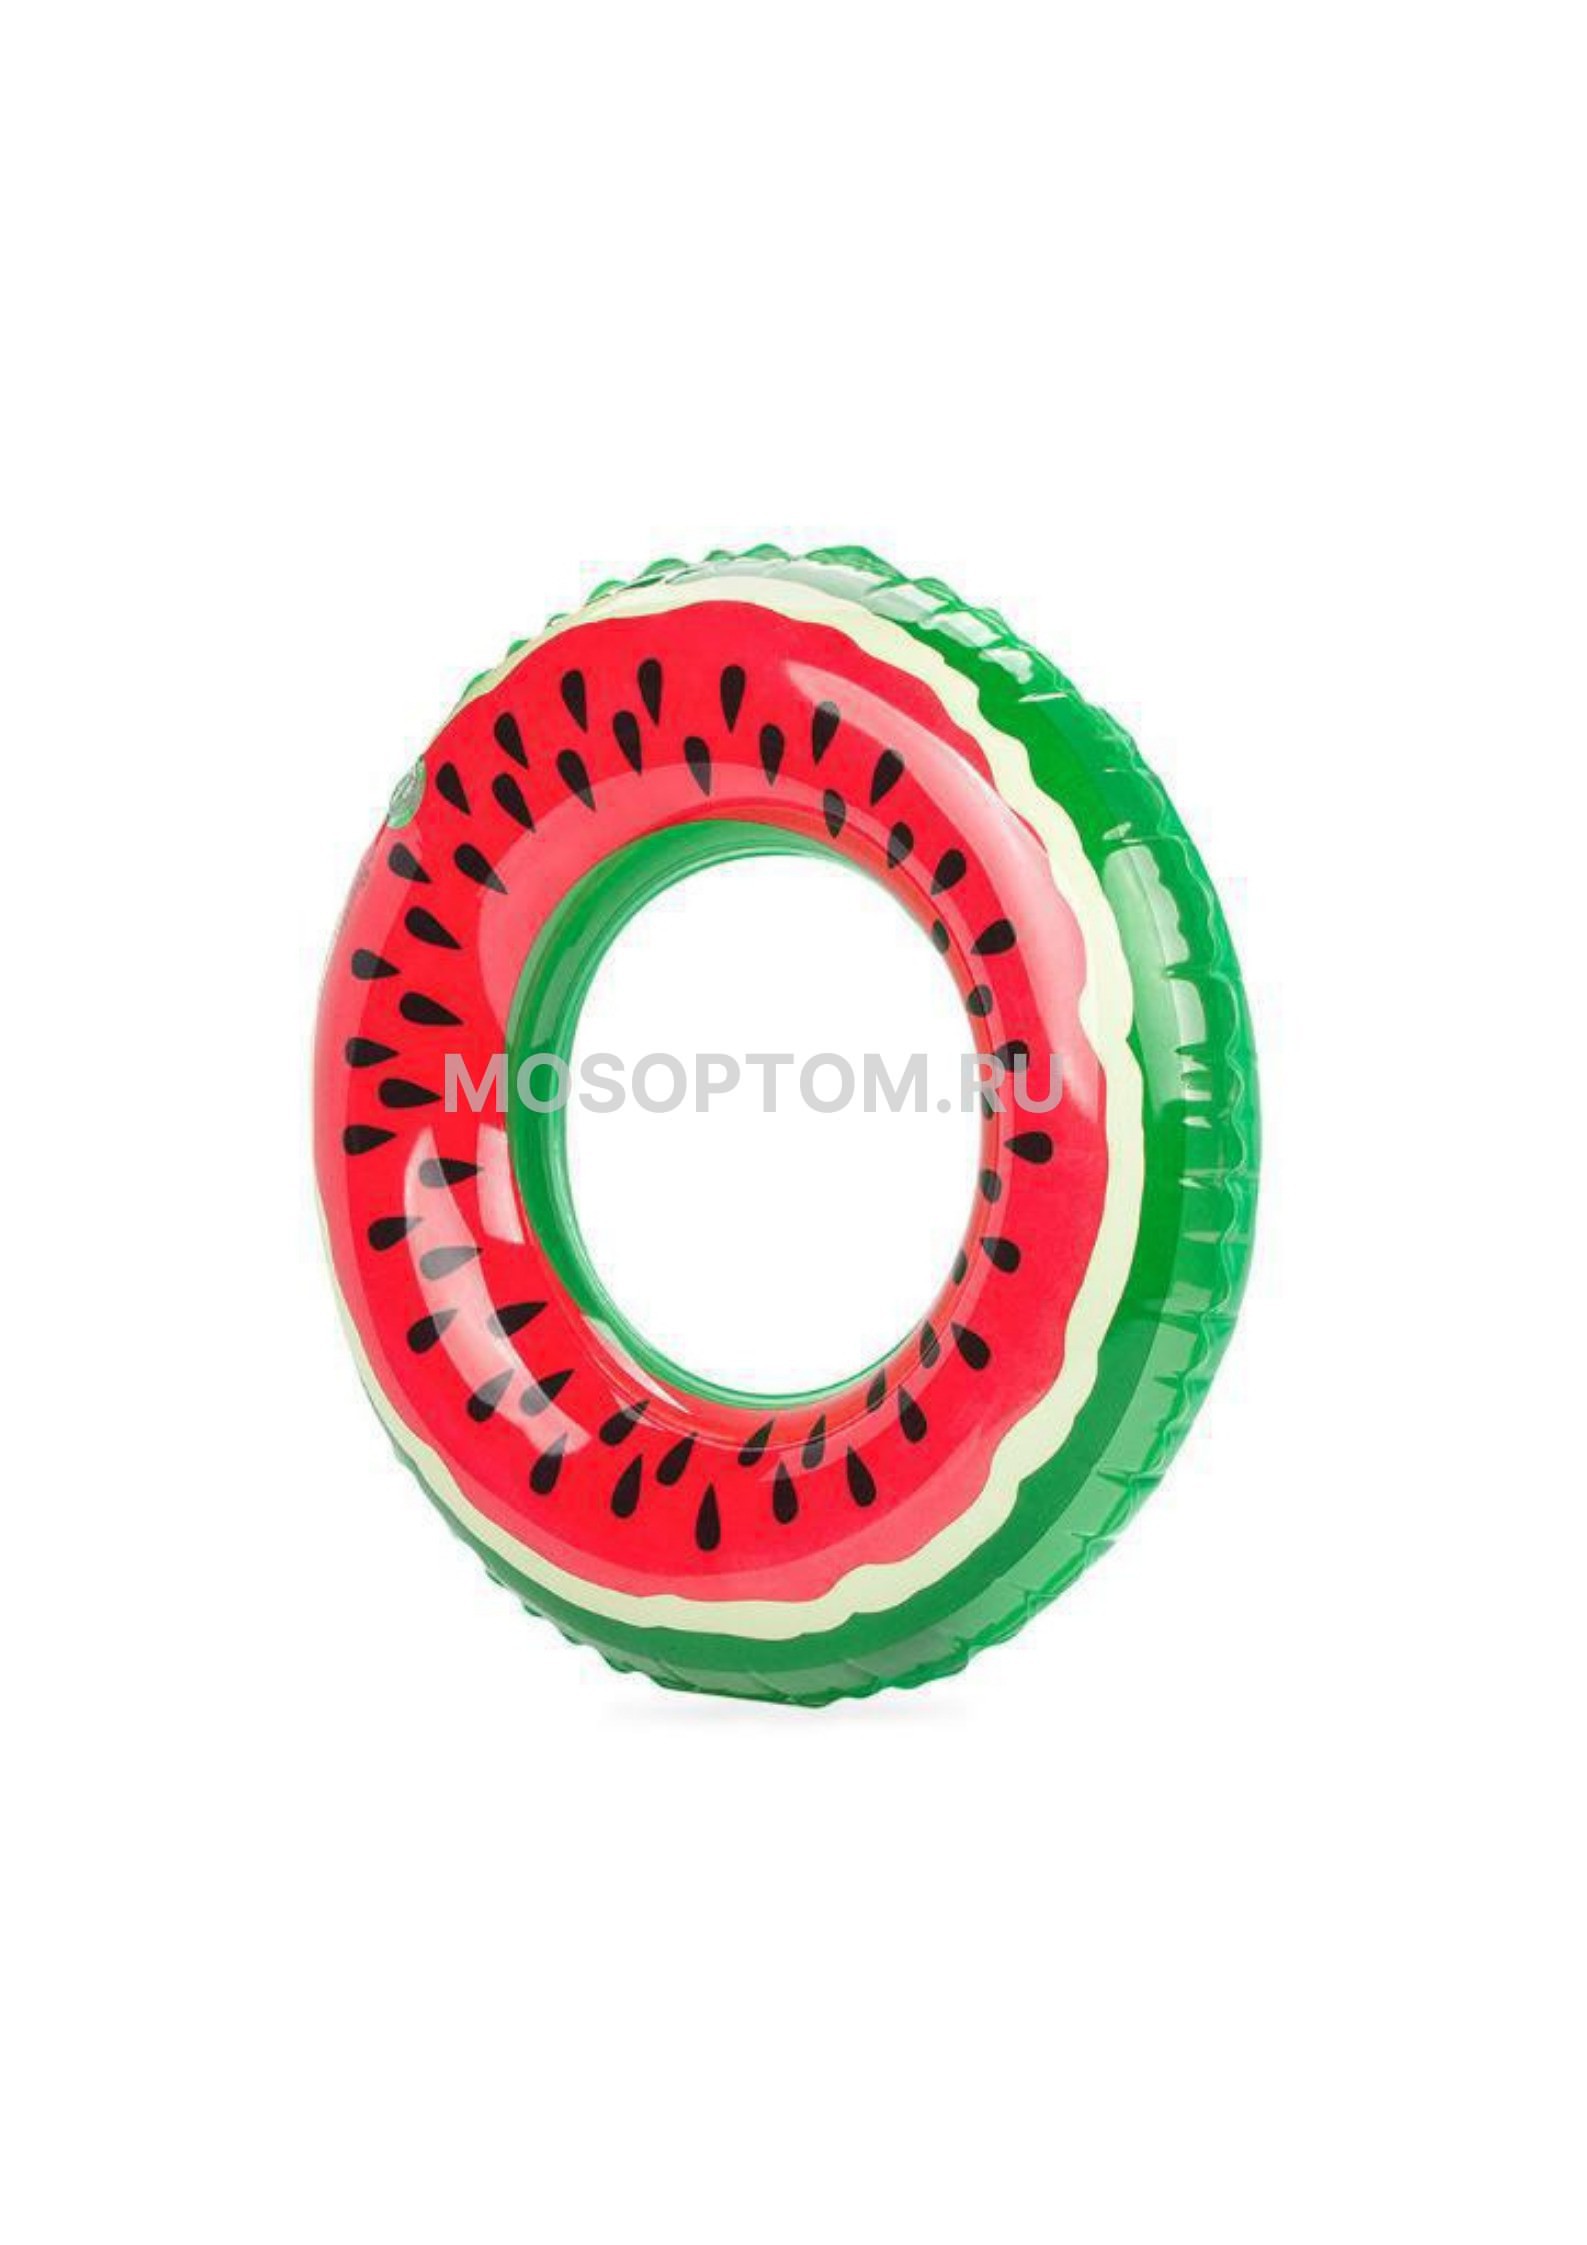 Надувной круг Арбуз Watermelon 120см оптом - Фото №2